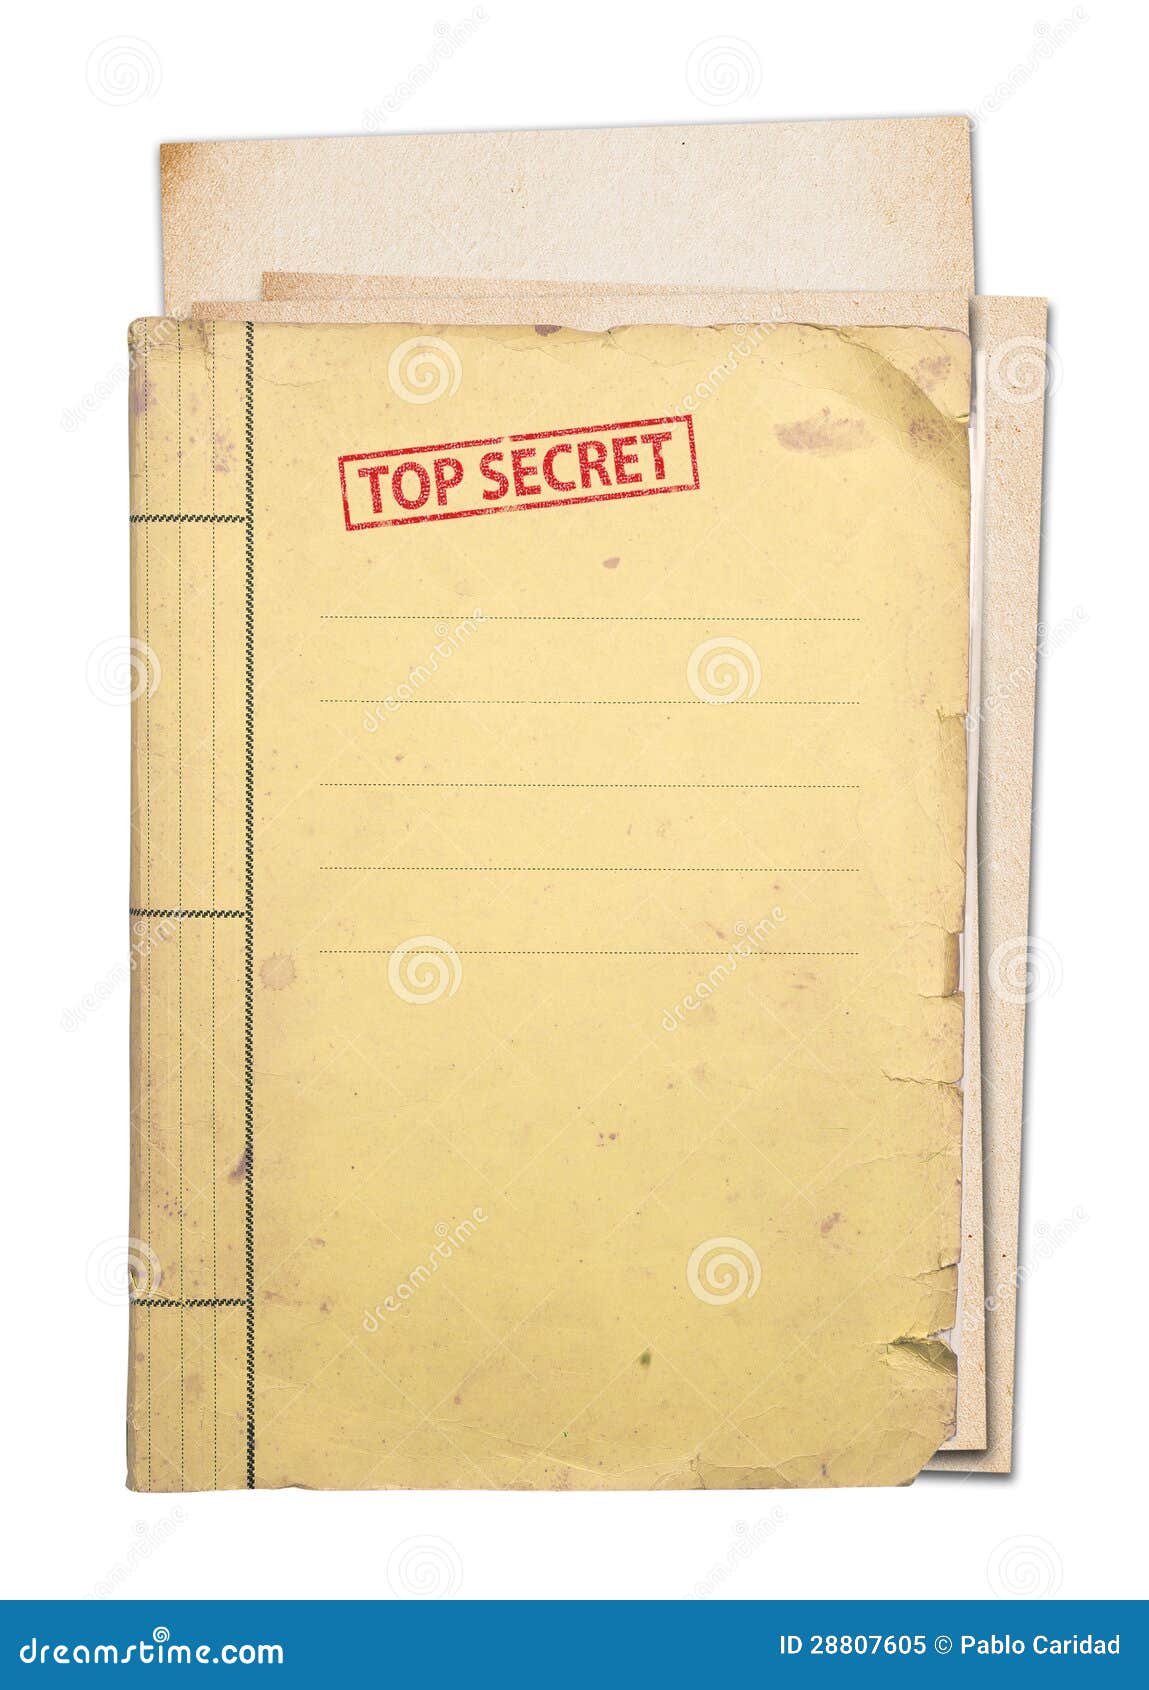 top secret folder.